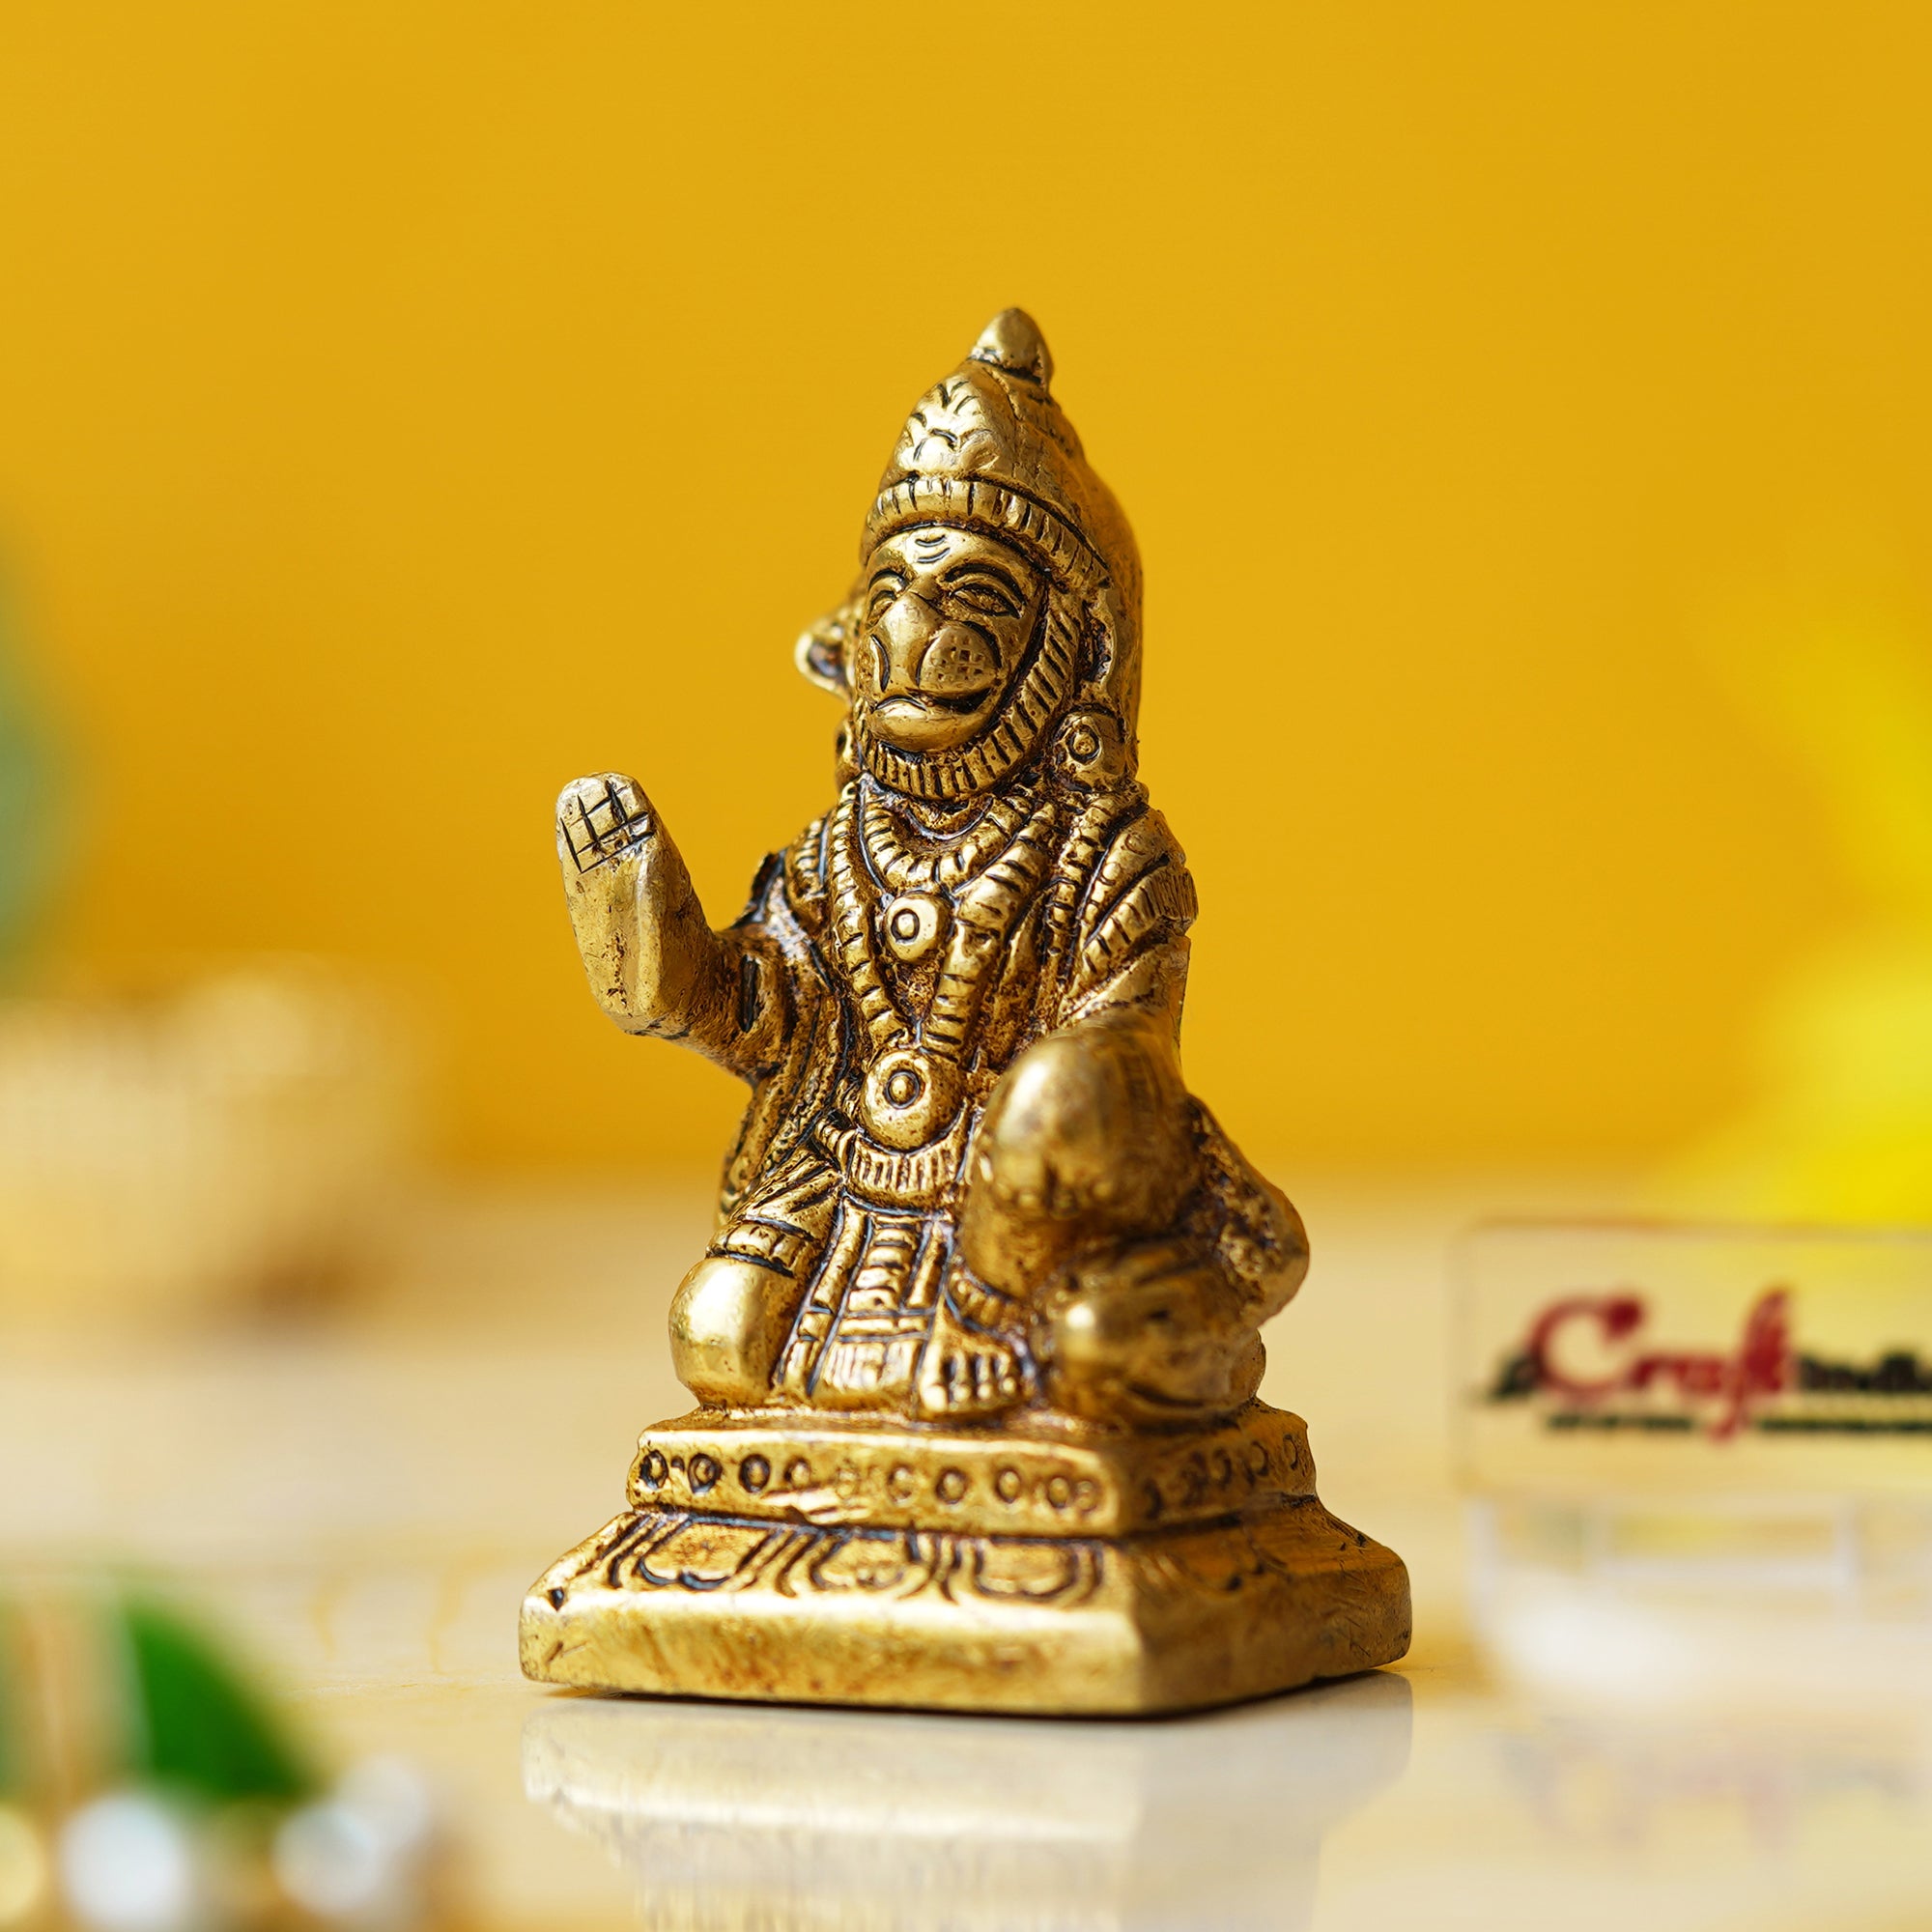 Golden Brass Blessing Lord Hanuman Statue Murti - Hindu God Idol for Home, Office, Temple Mandir - Hanuman Jayanti Gift 1